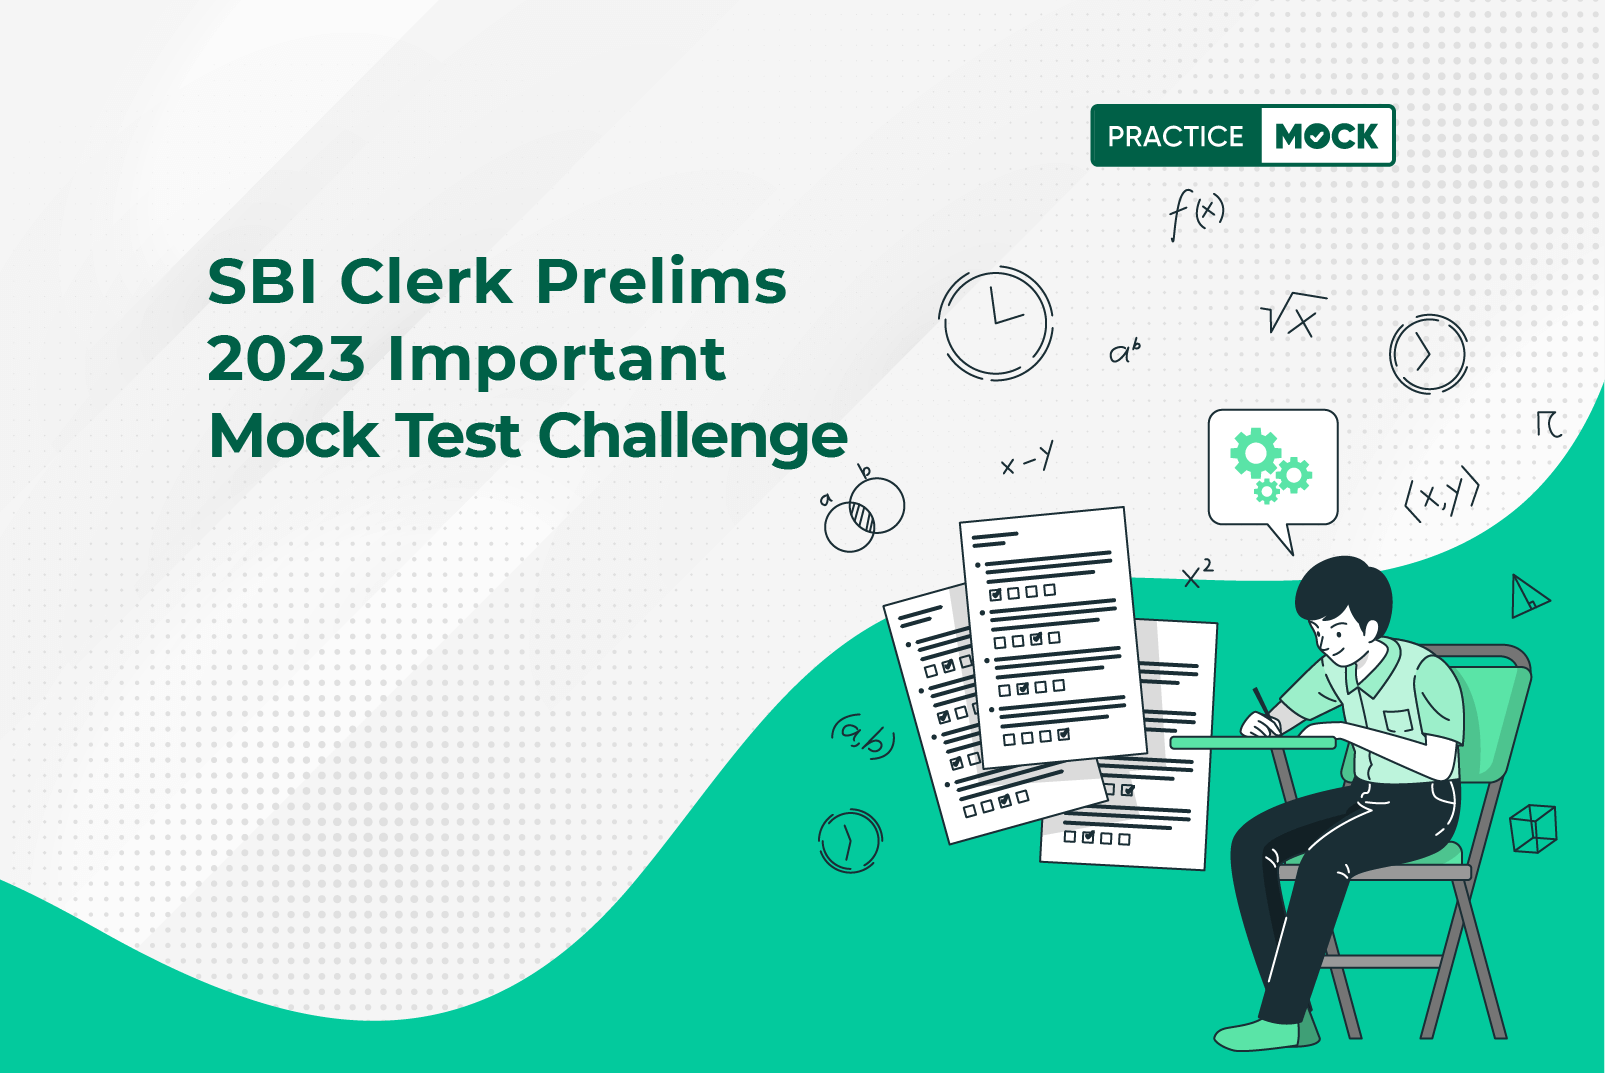 SBI Clerk Prelims 2023 Important Mock Test Challenge